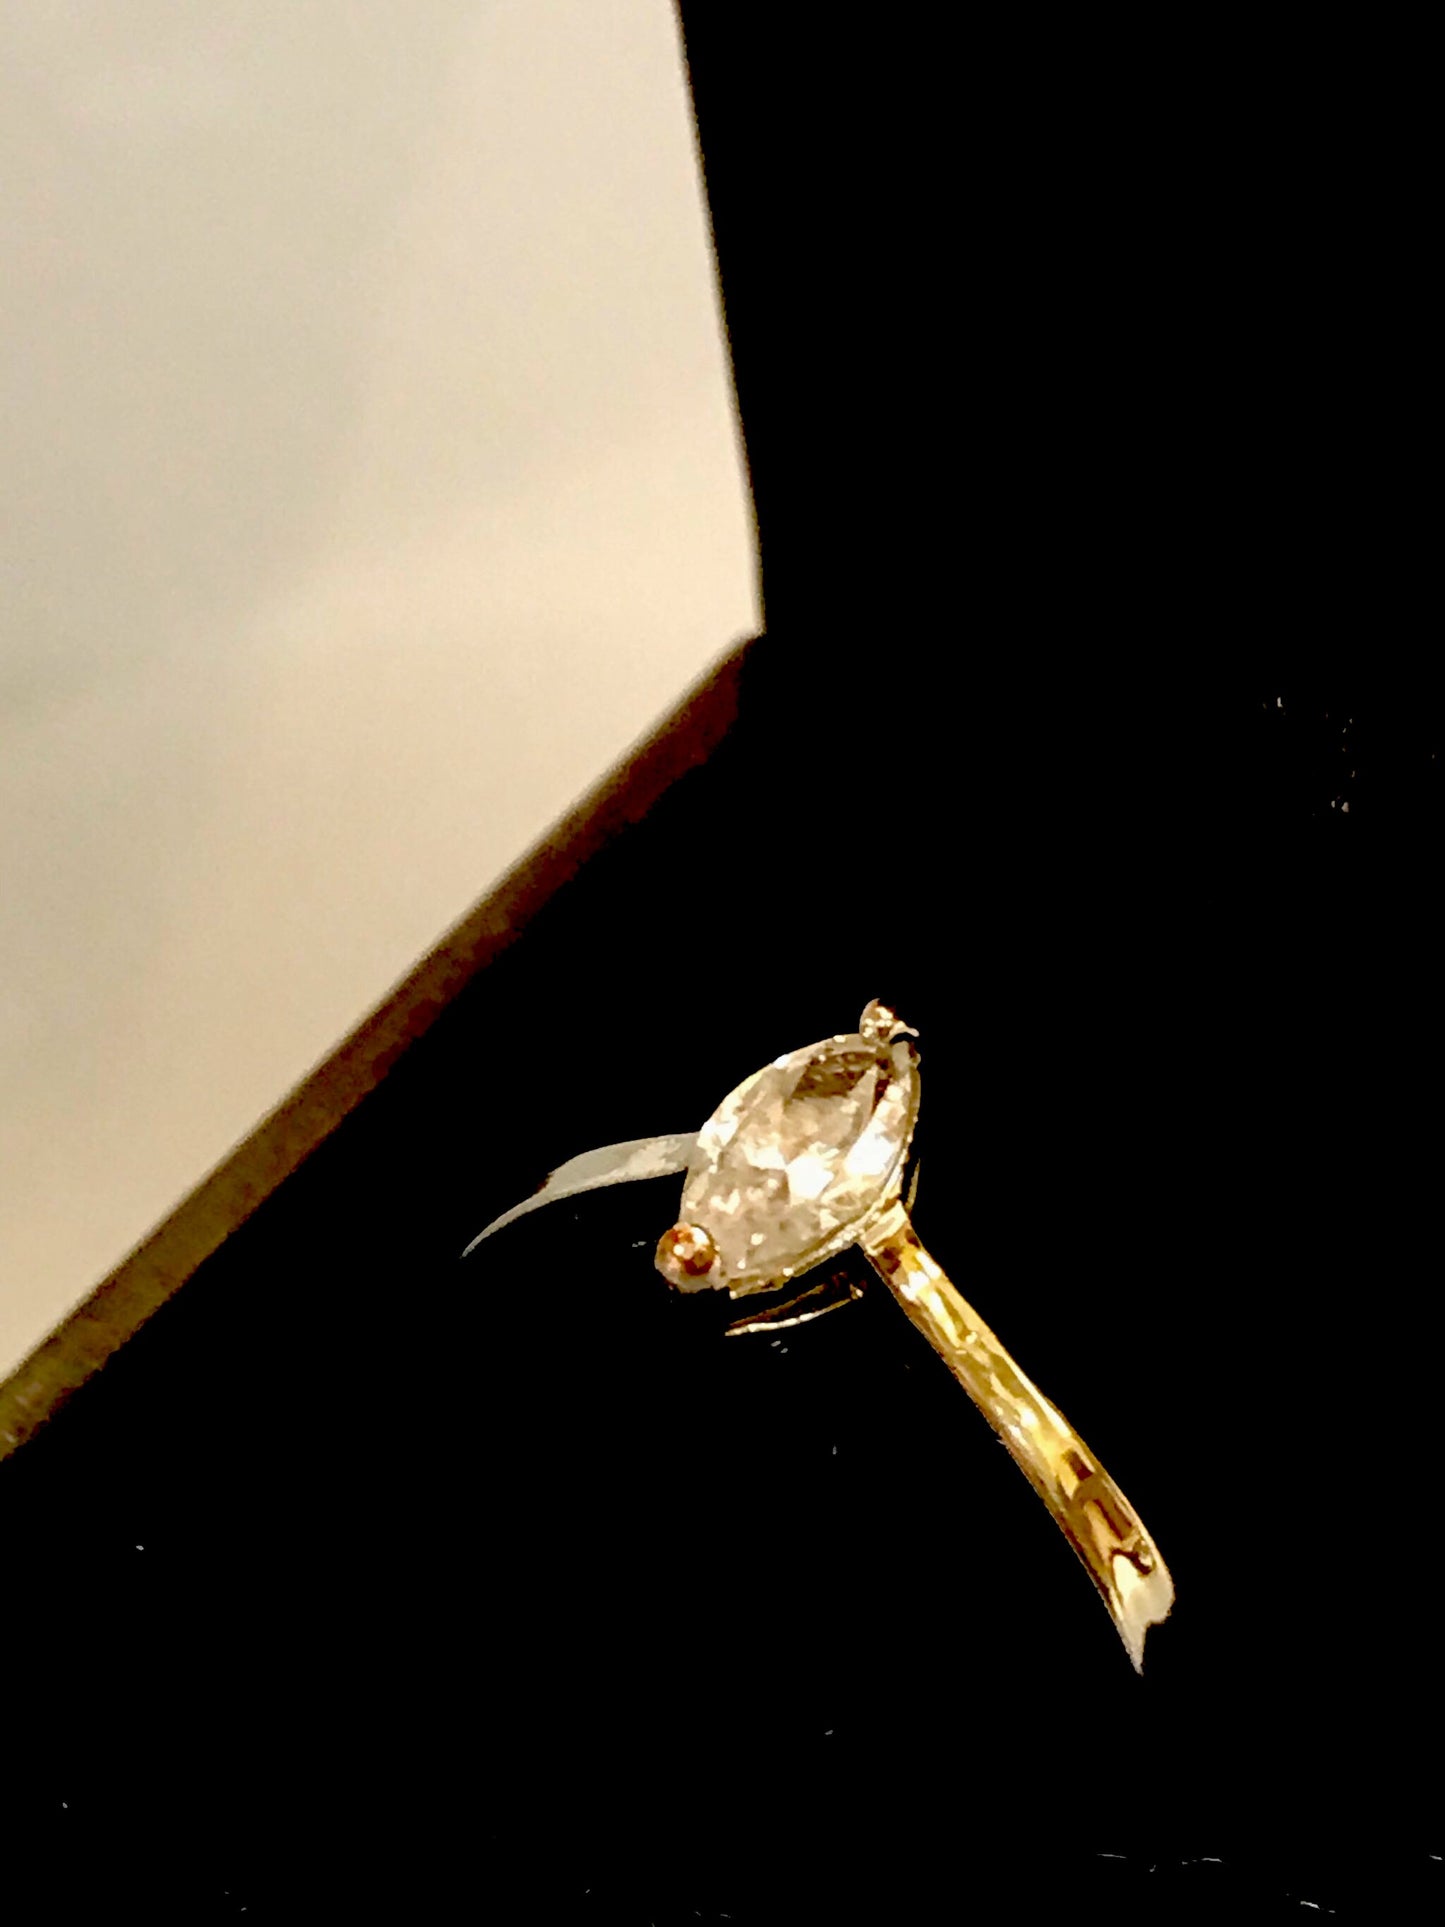 Teardrop 'Diamond' Vintage Silver Ring